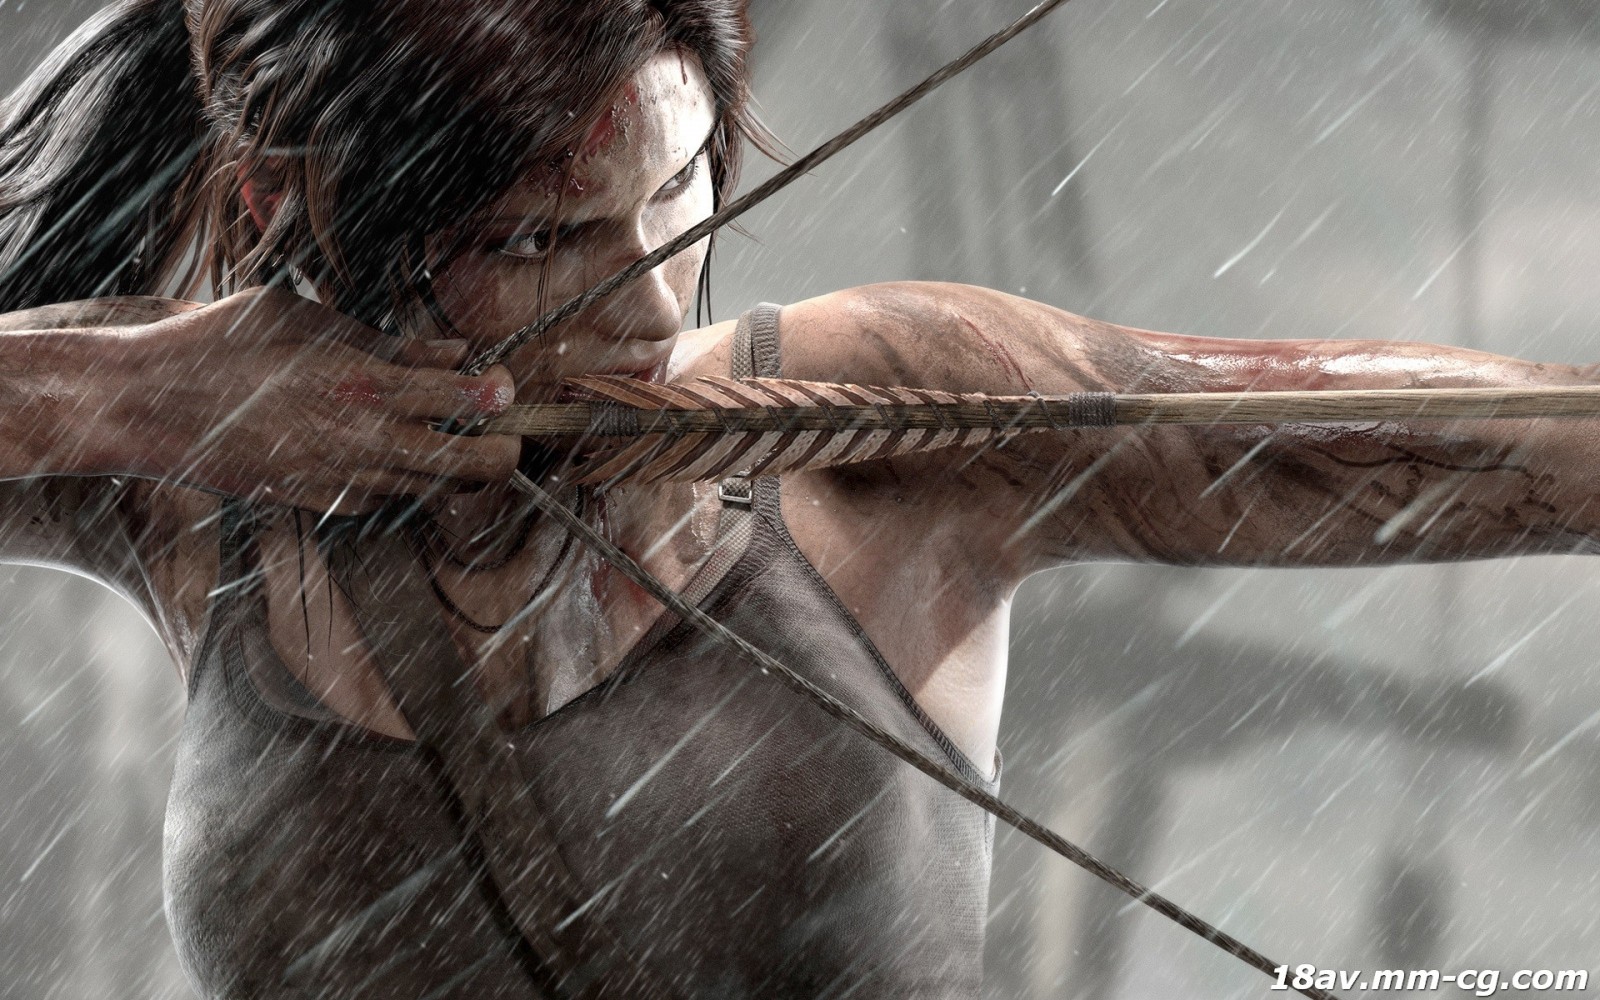 [3D][Textless]Lara gặp rắc rối IV trong Tomb Raider Underworld